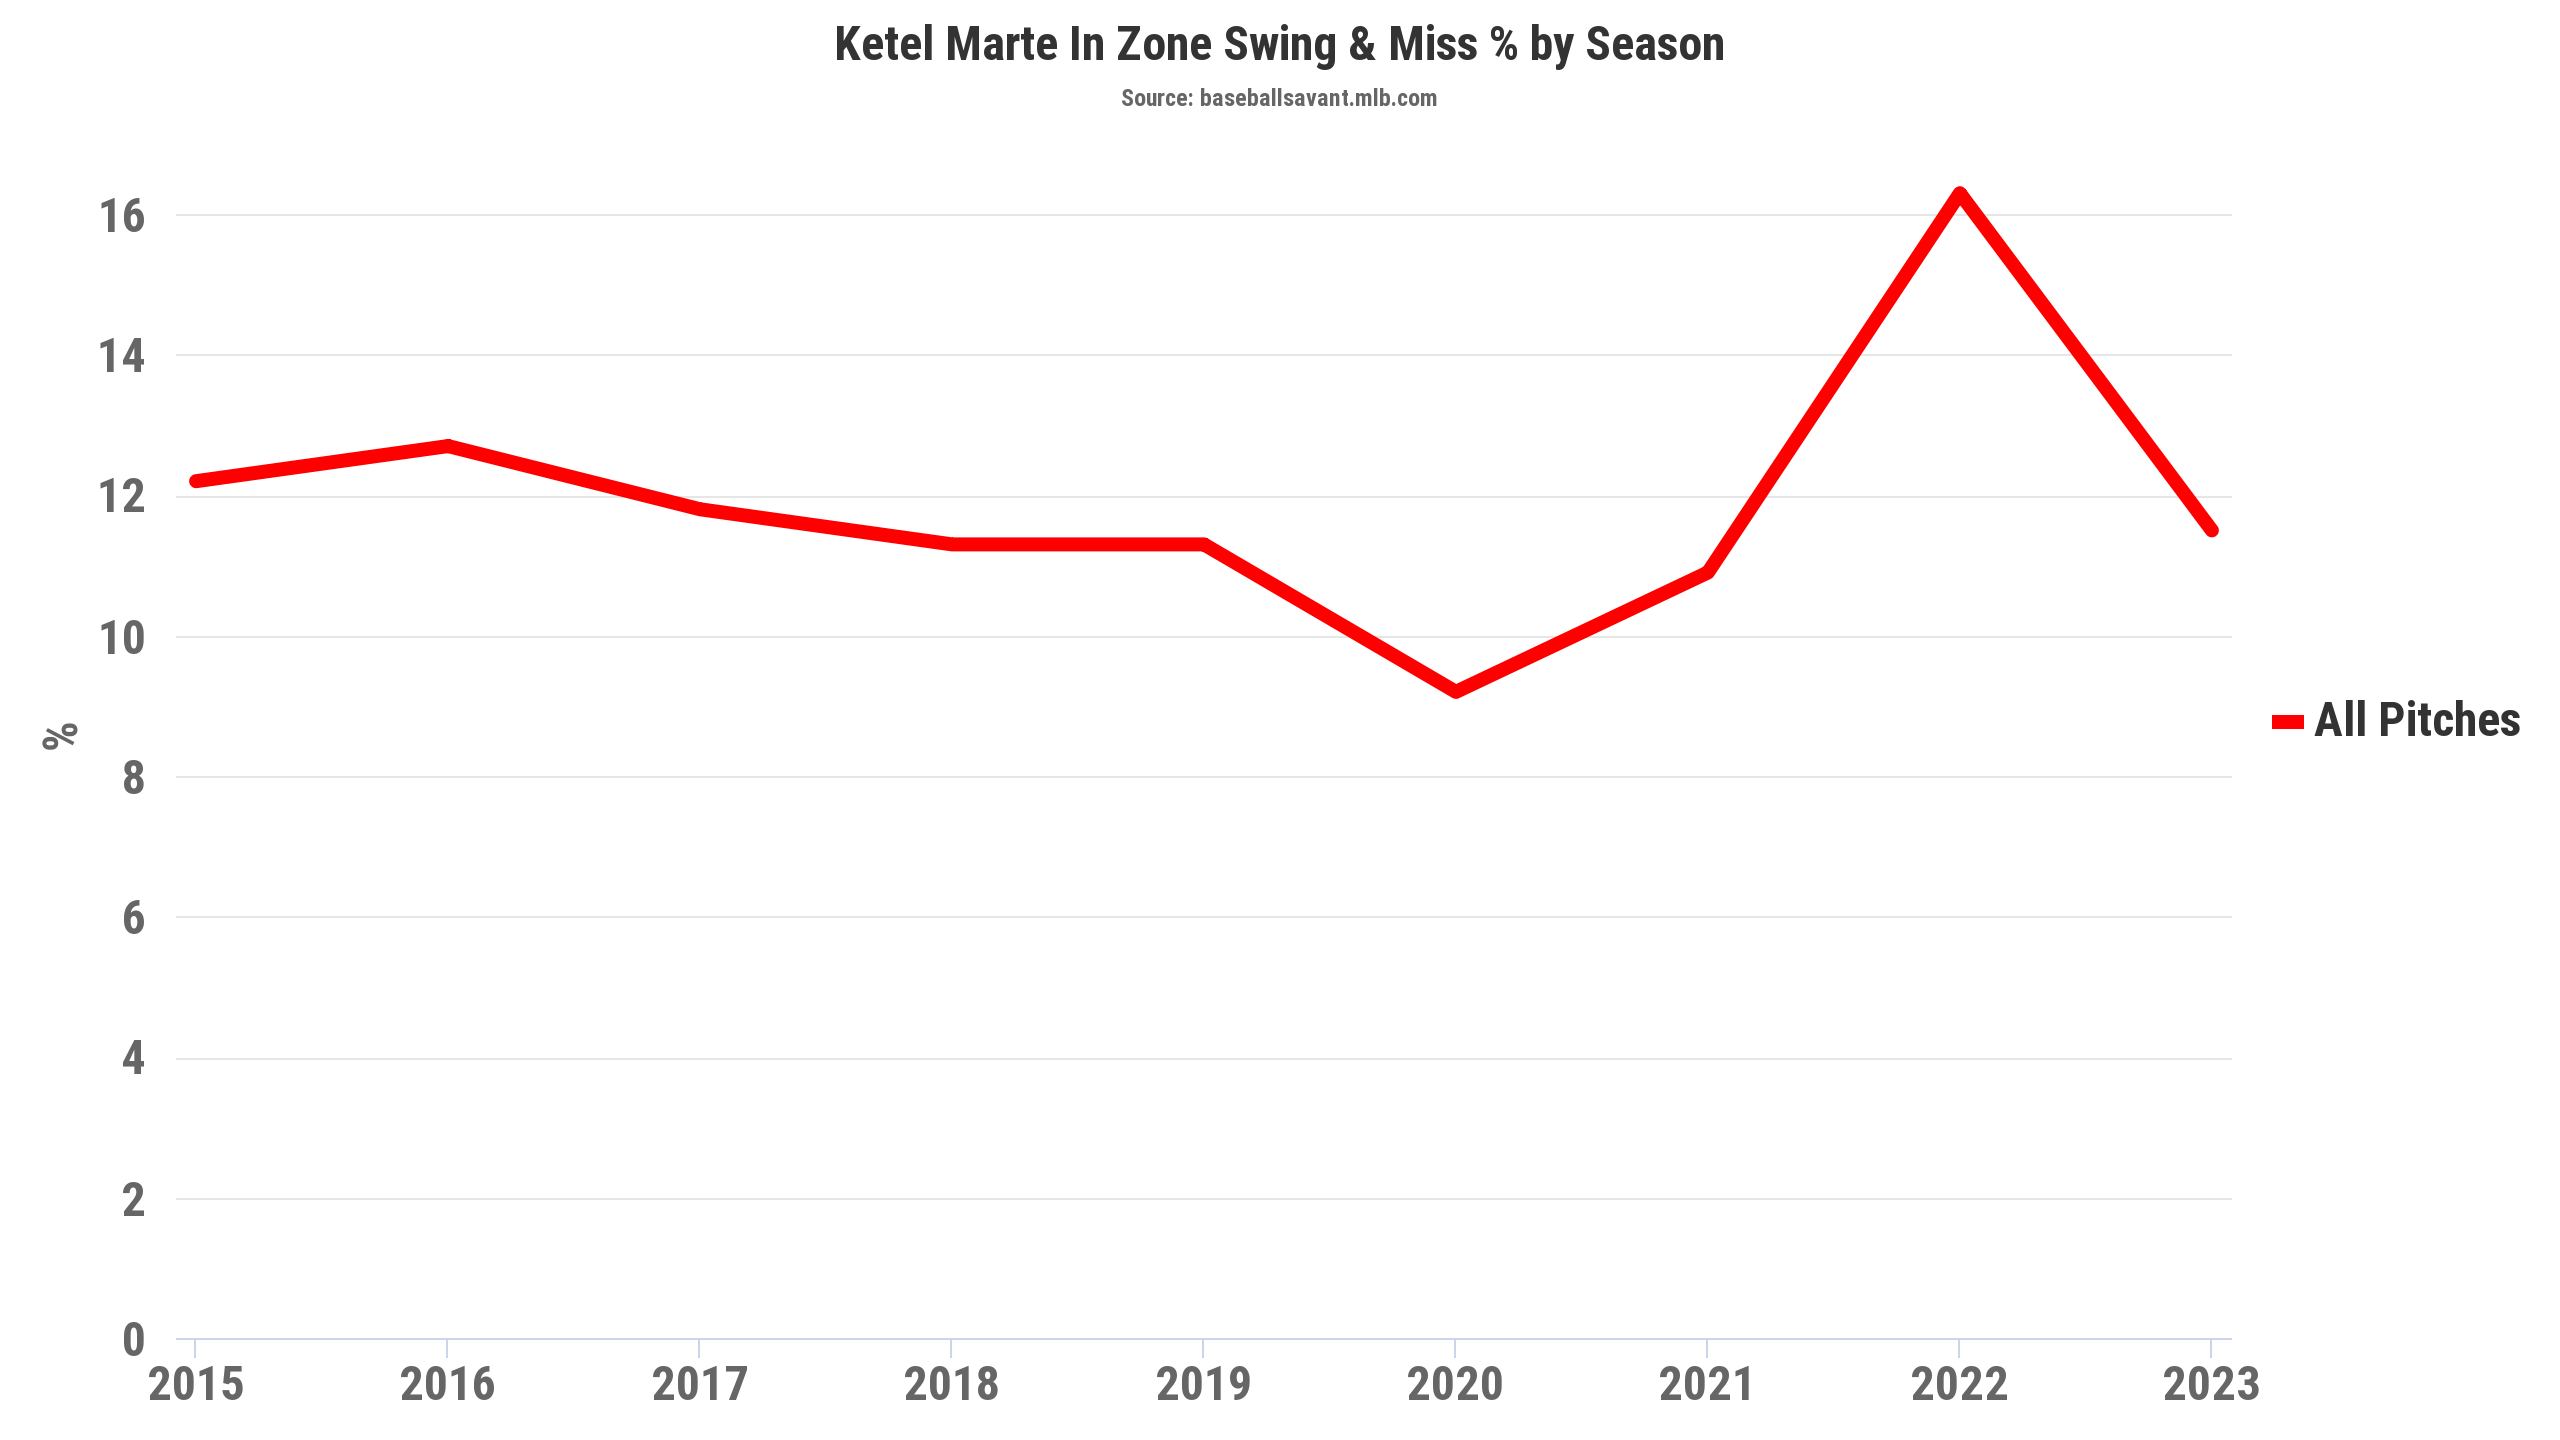 Ketel Marte in-zone whiff rate by season, according to Baseball Savant